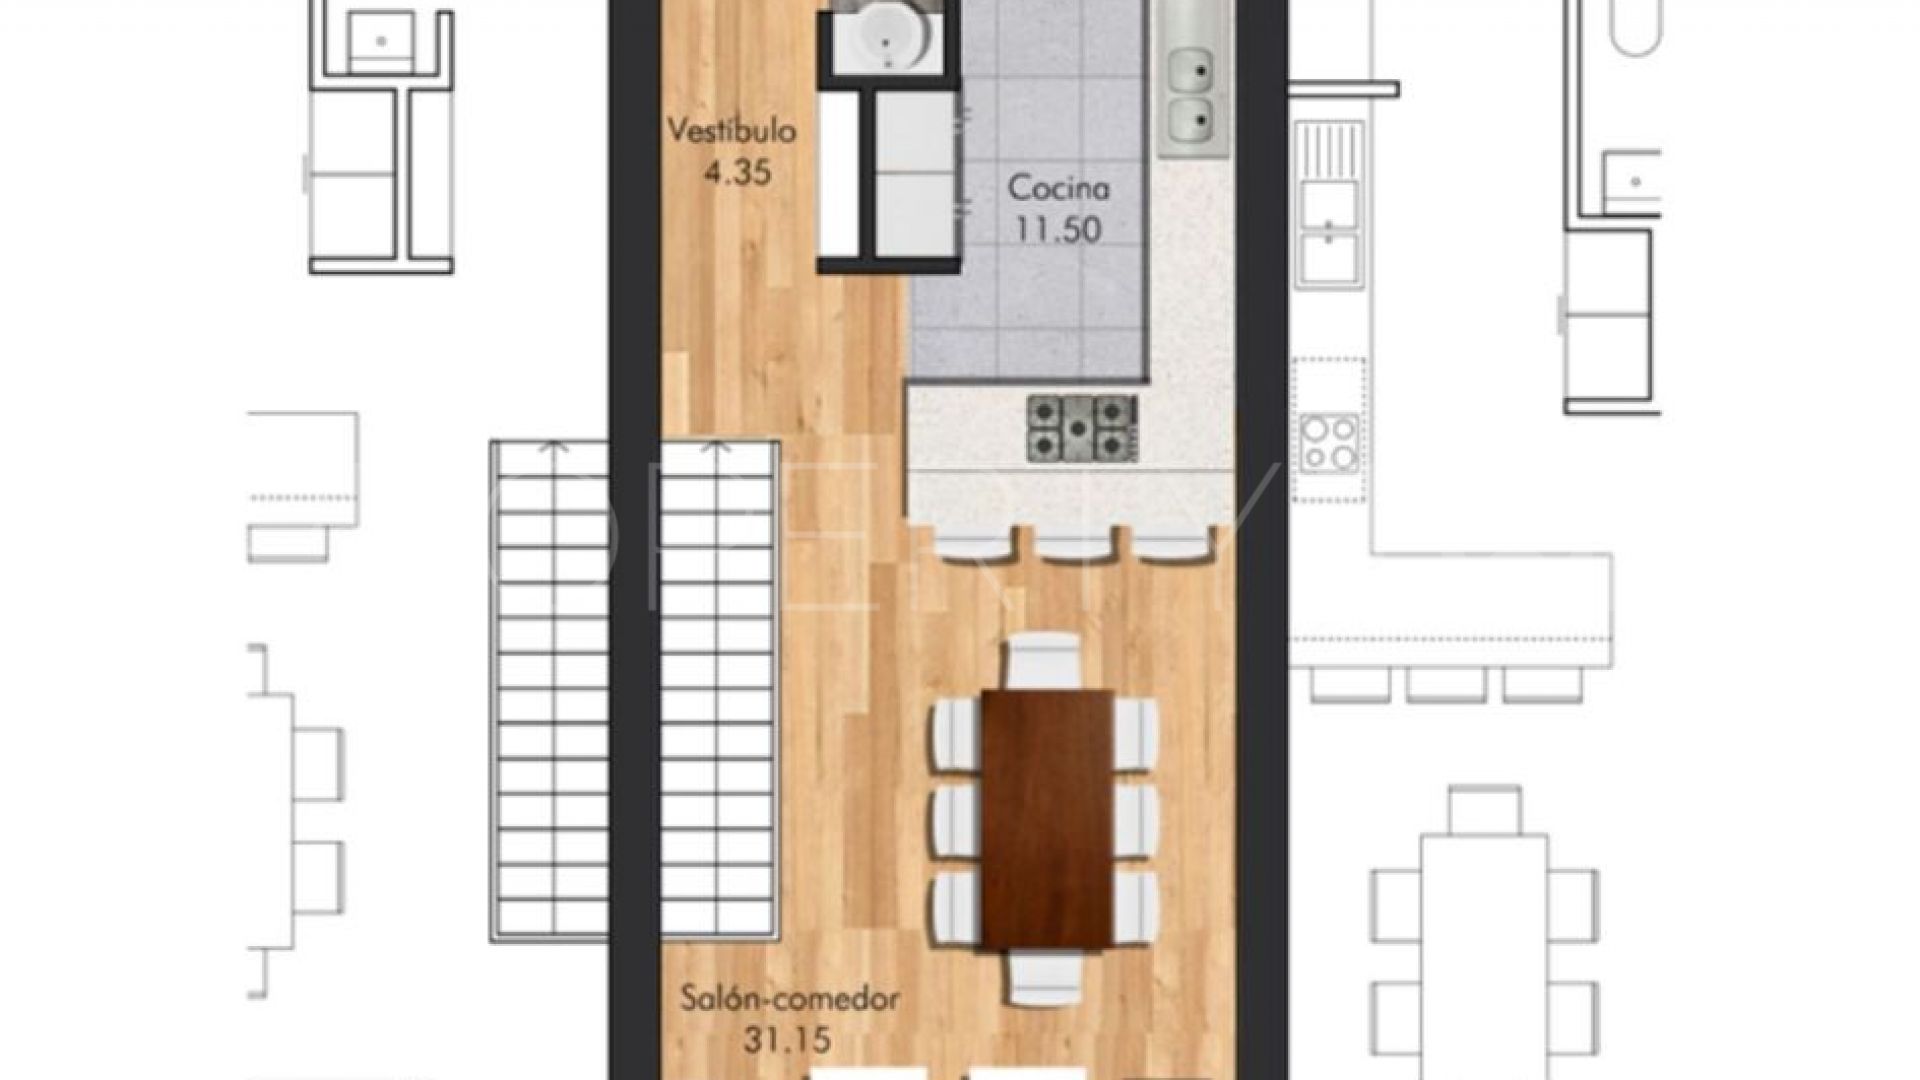 Alcaidesa Costa 3 bedrooms apartment for sale